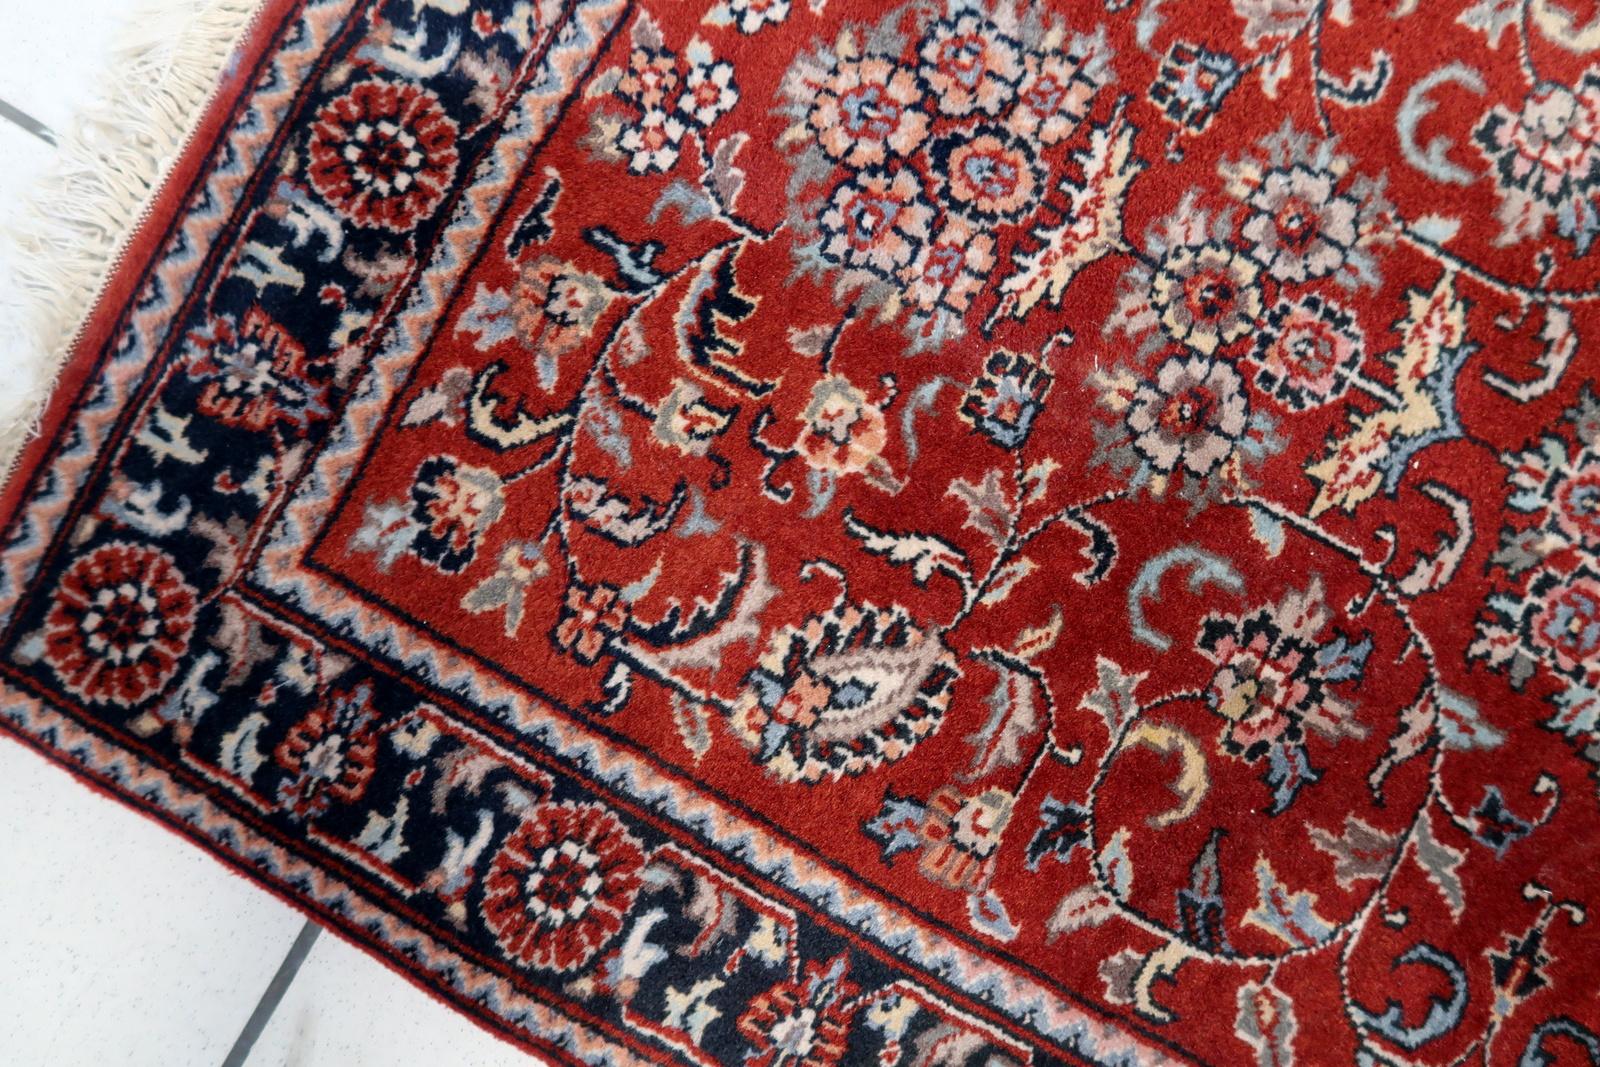 Wool Handmade Vintage Persian Style Sarouk Rug 2.4' x 4', 1970s - 1C1115 For Sale